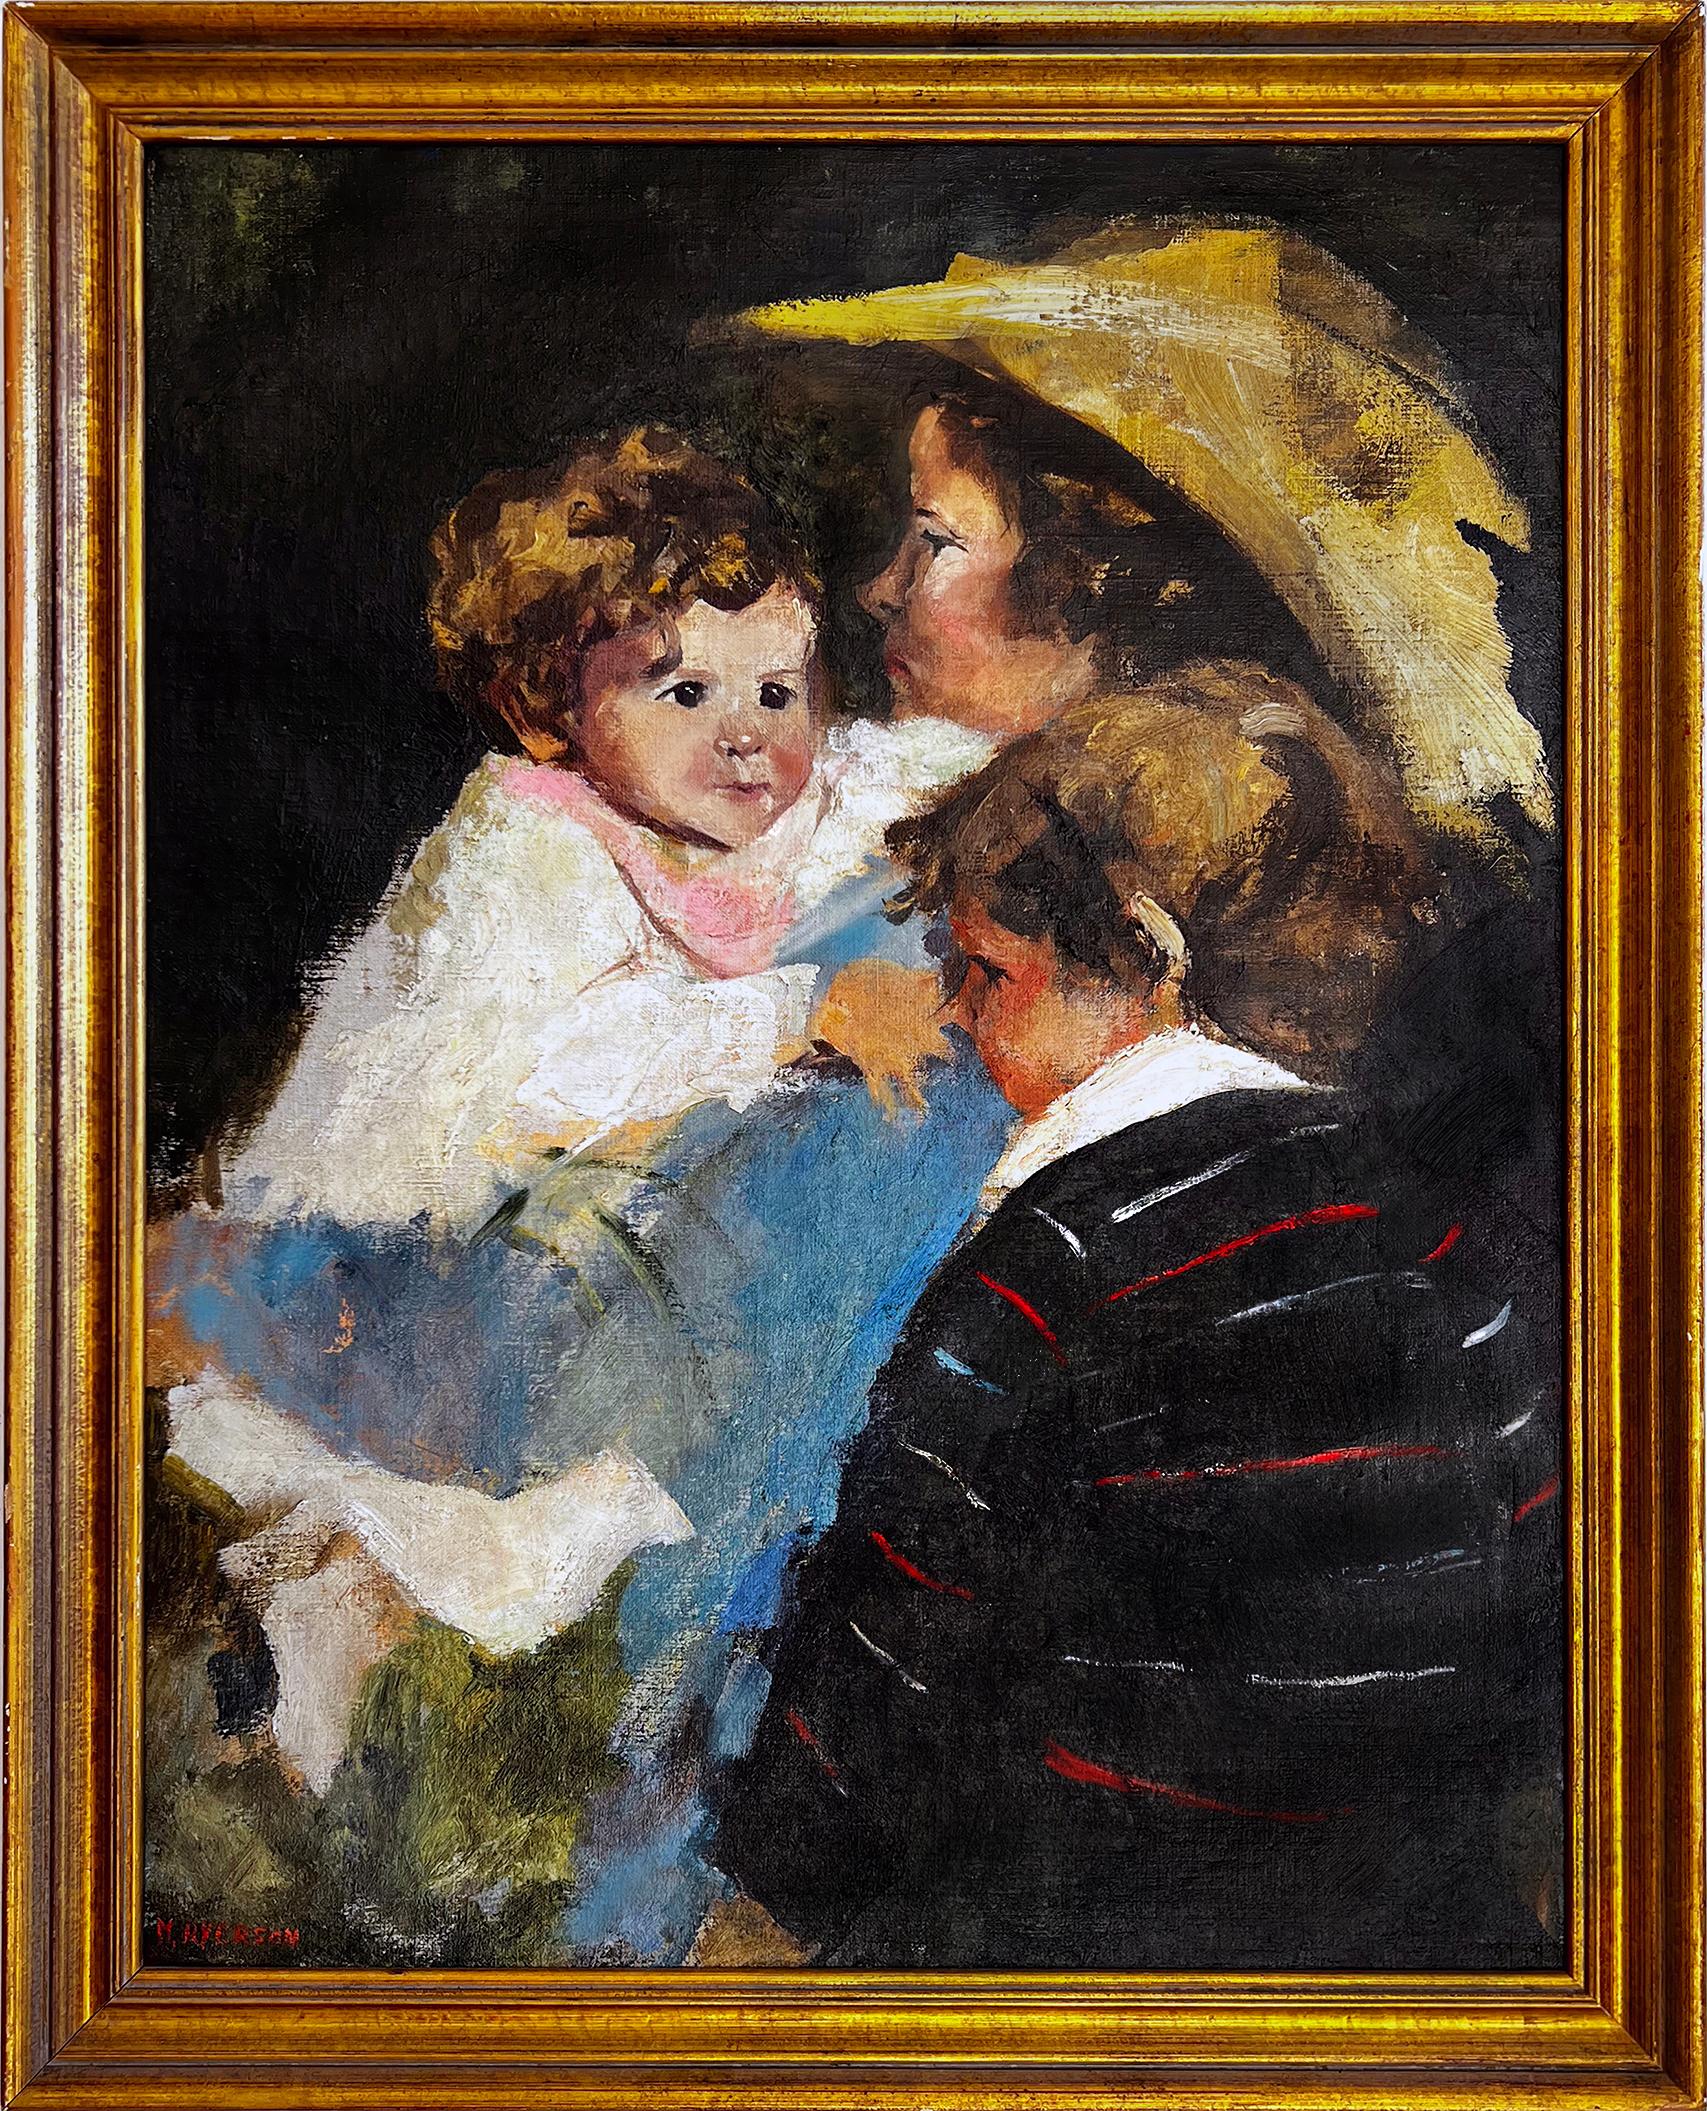 Tender Family Portrait - Mother and Child, Student of Robert Henri